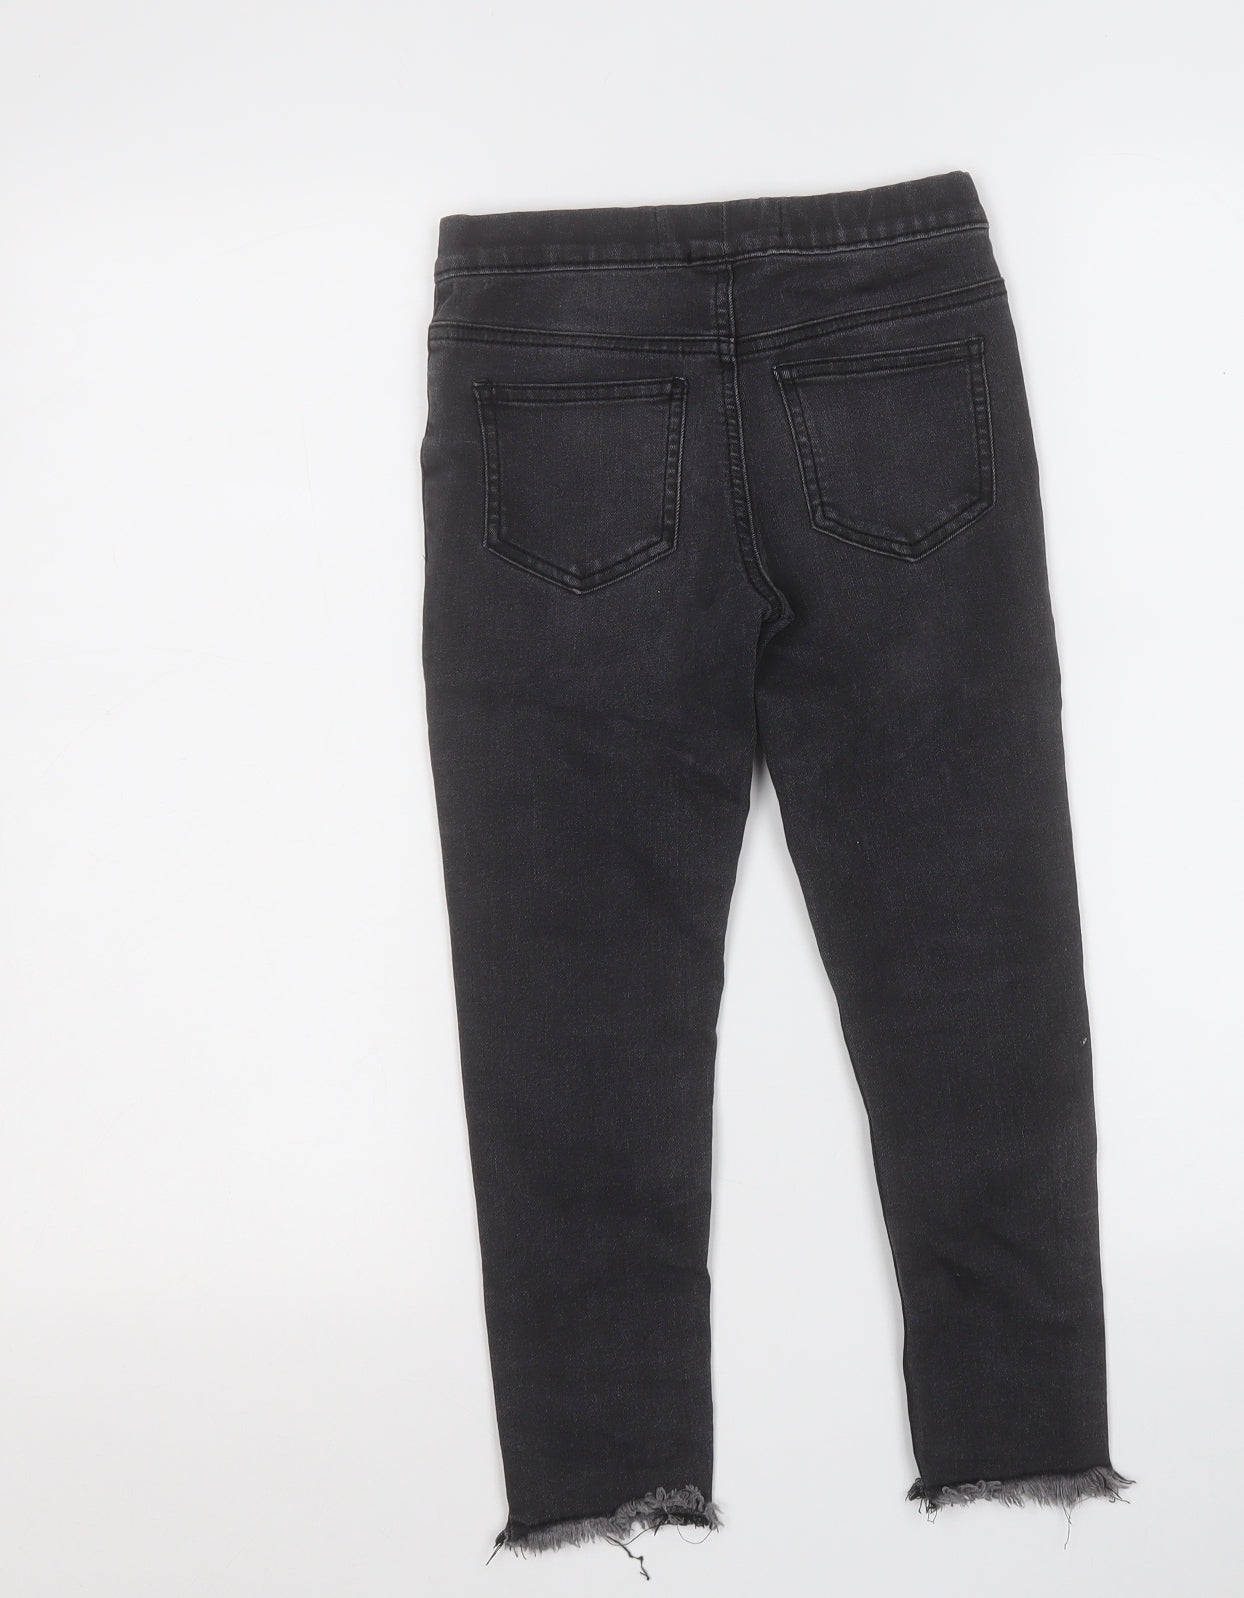 Denim & Co. Girls Grey  Cotton Jegging Jeans Size 6-7 Years  Regular